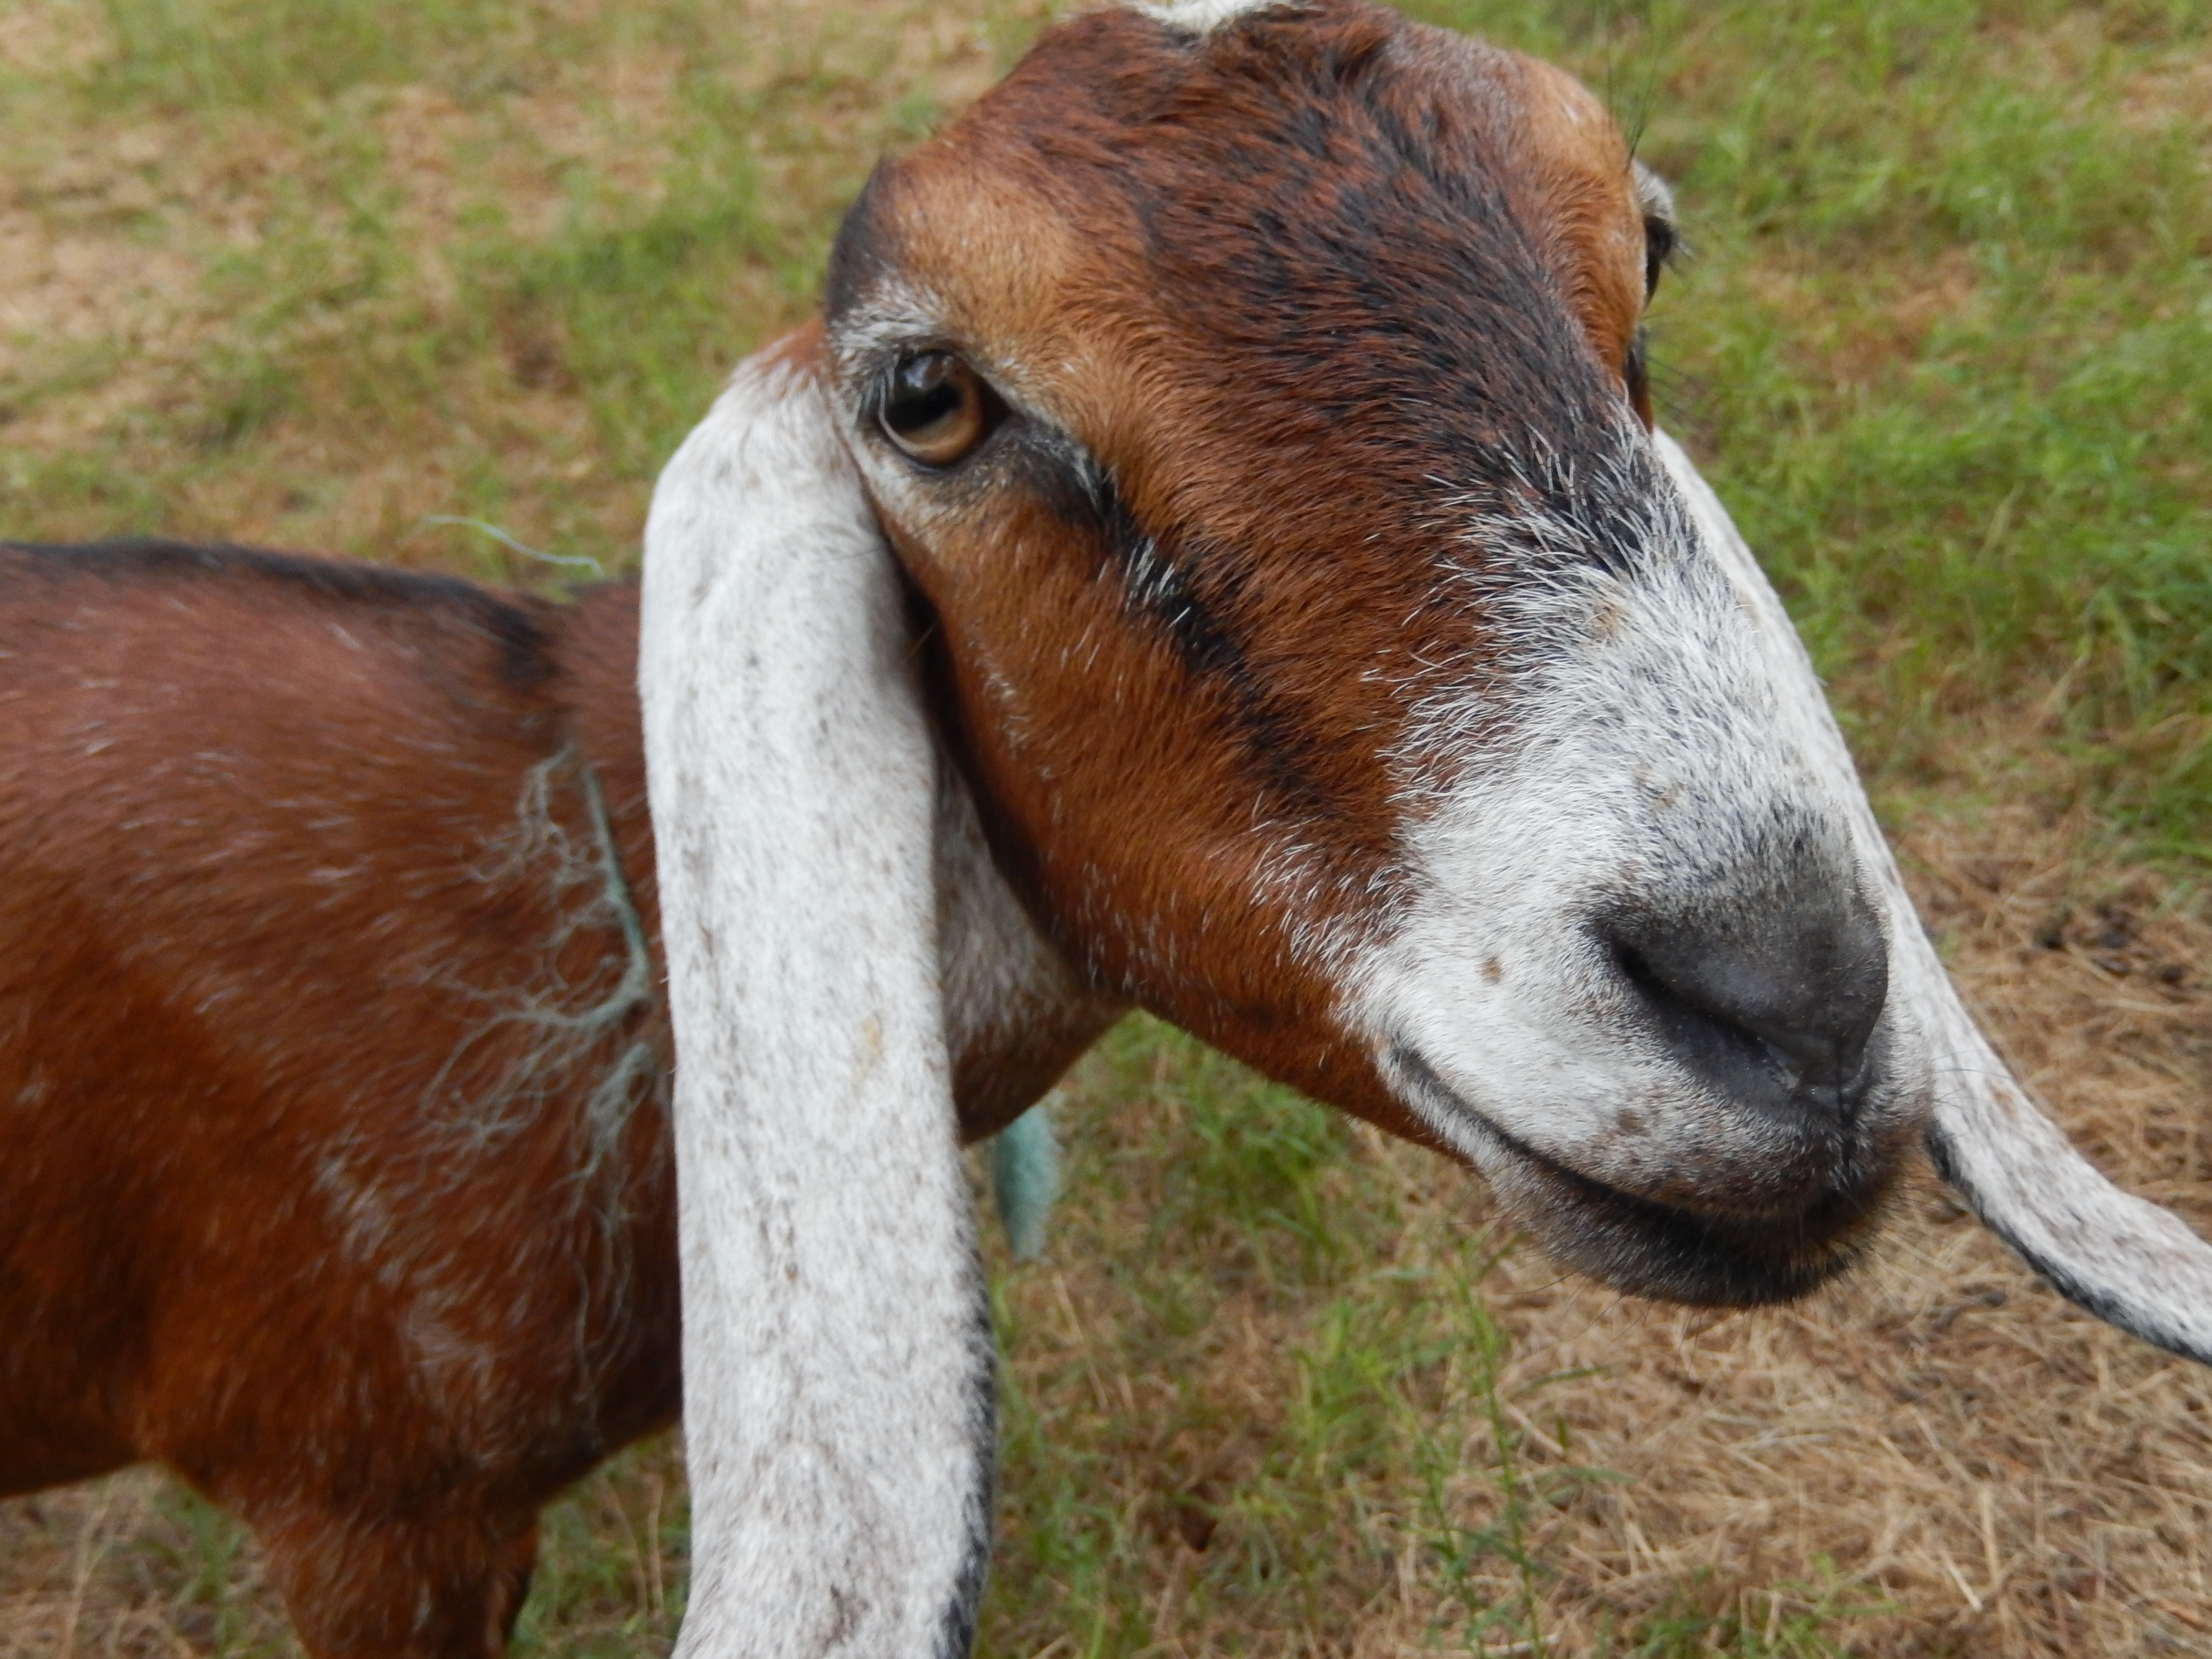 Goat at Underhill Preserve